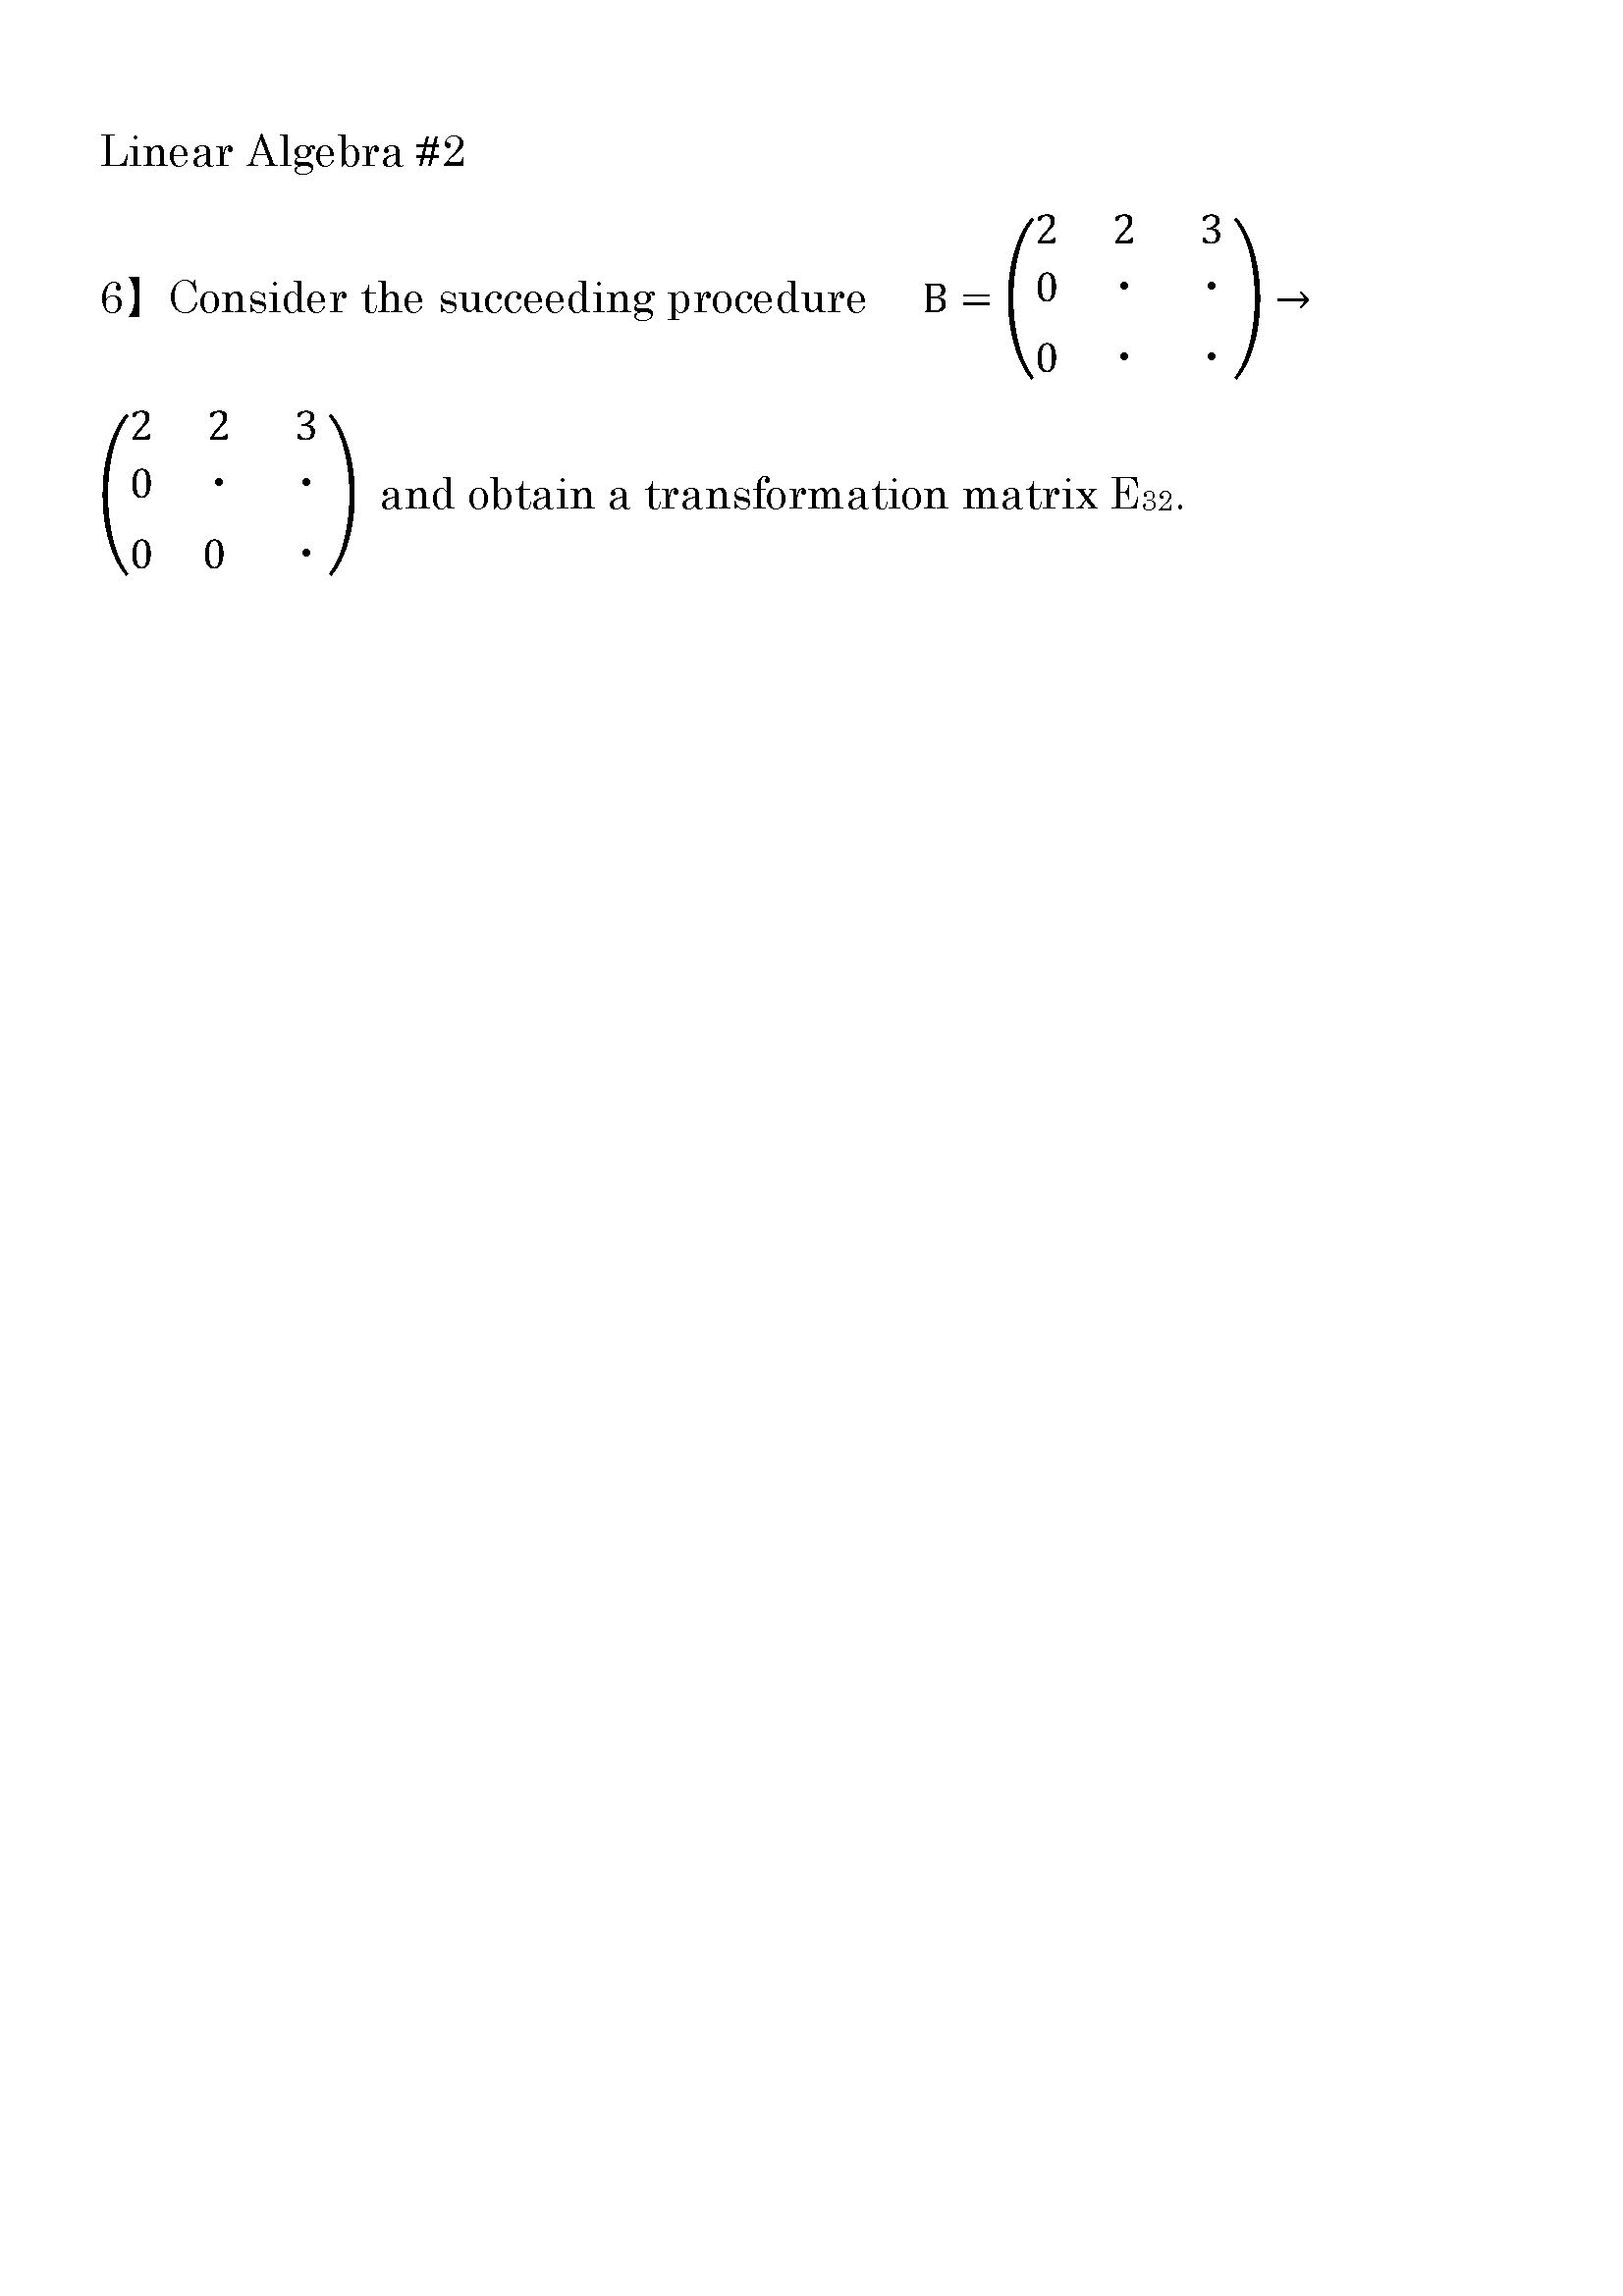 Linear_Algebra_Quiz2-tate2-6.jpg